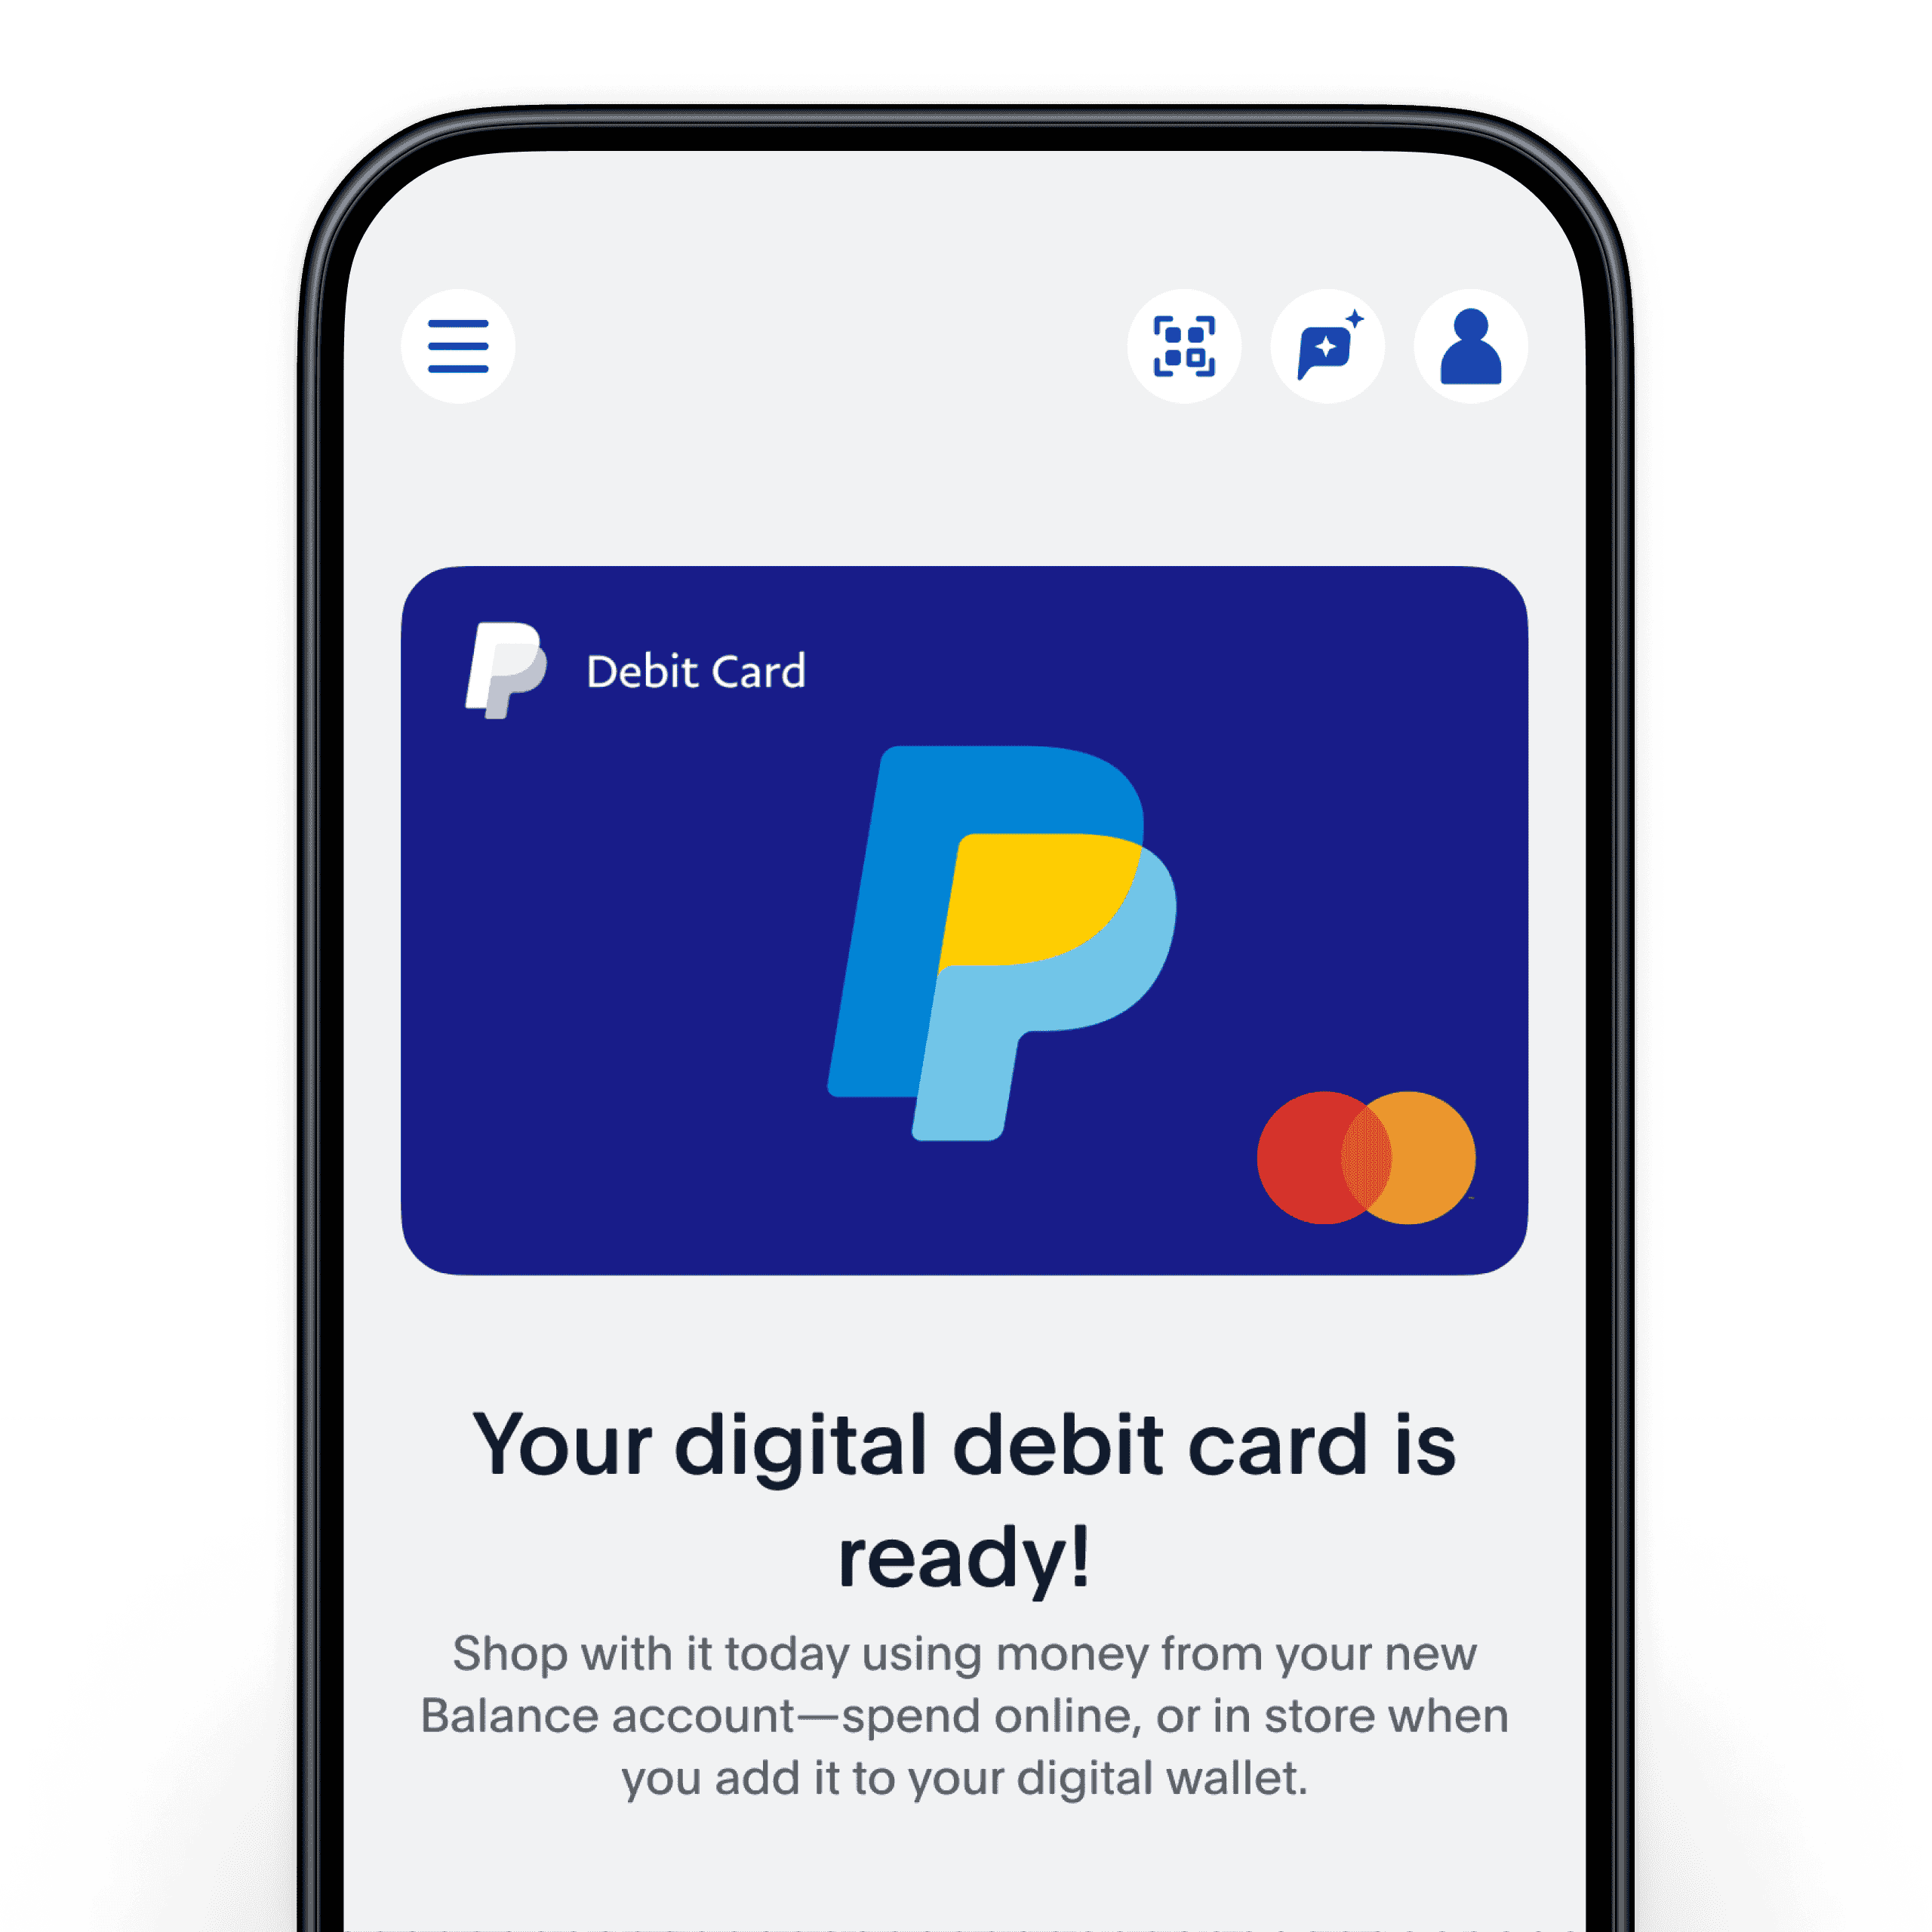 PayPal Debit MasterCard® Cardholder Agreement